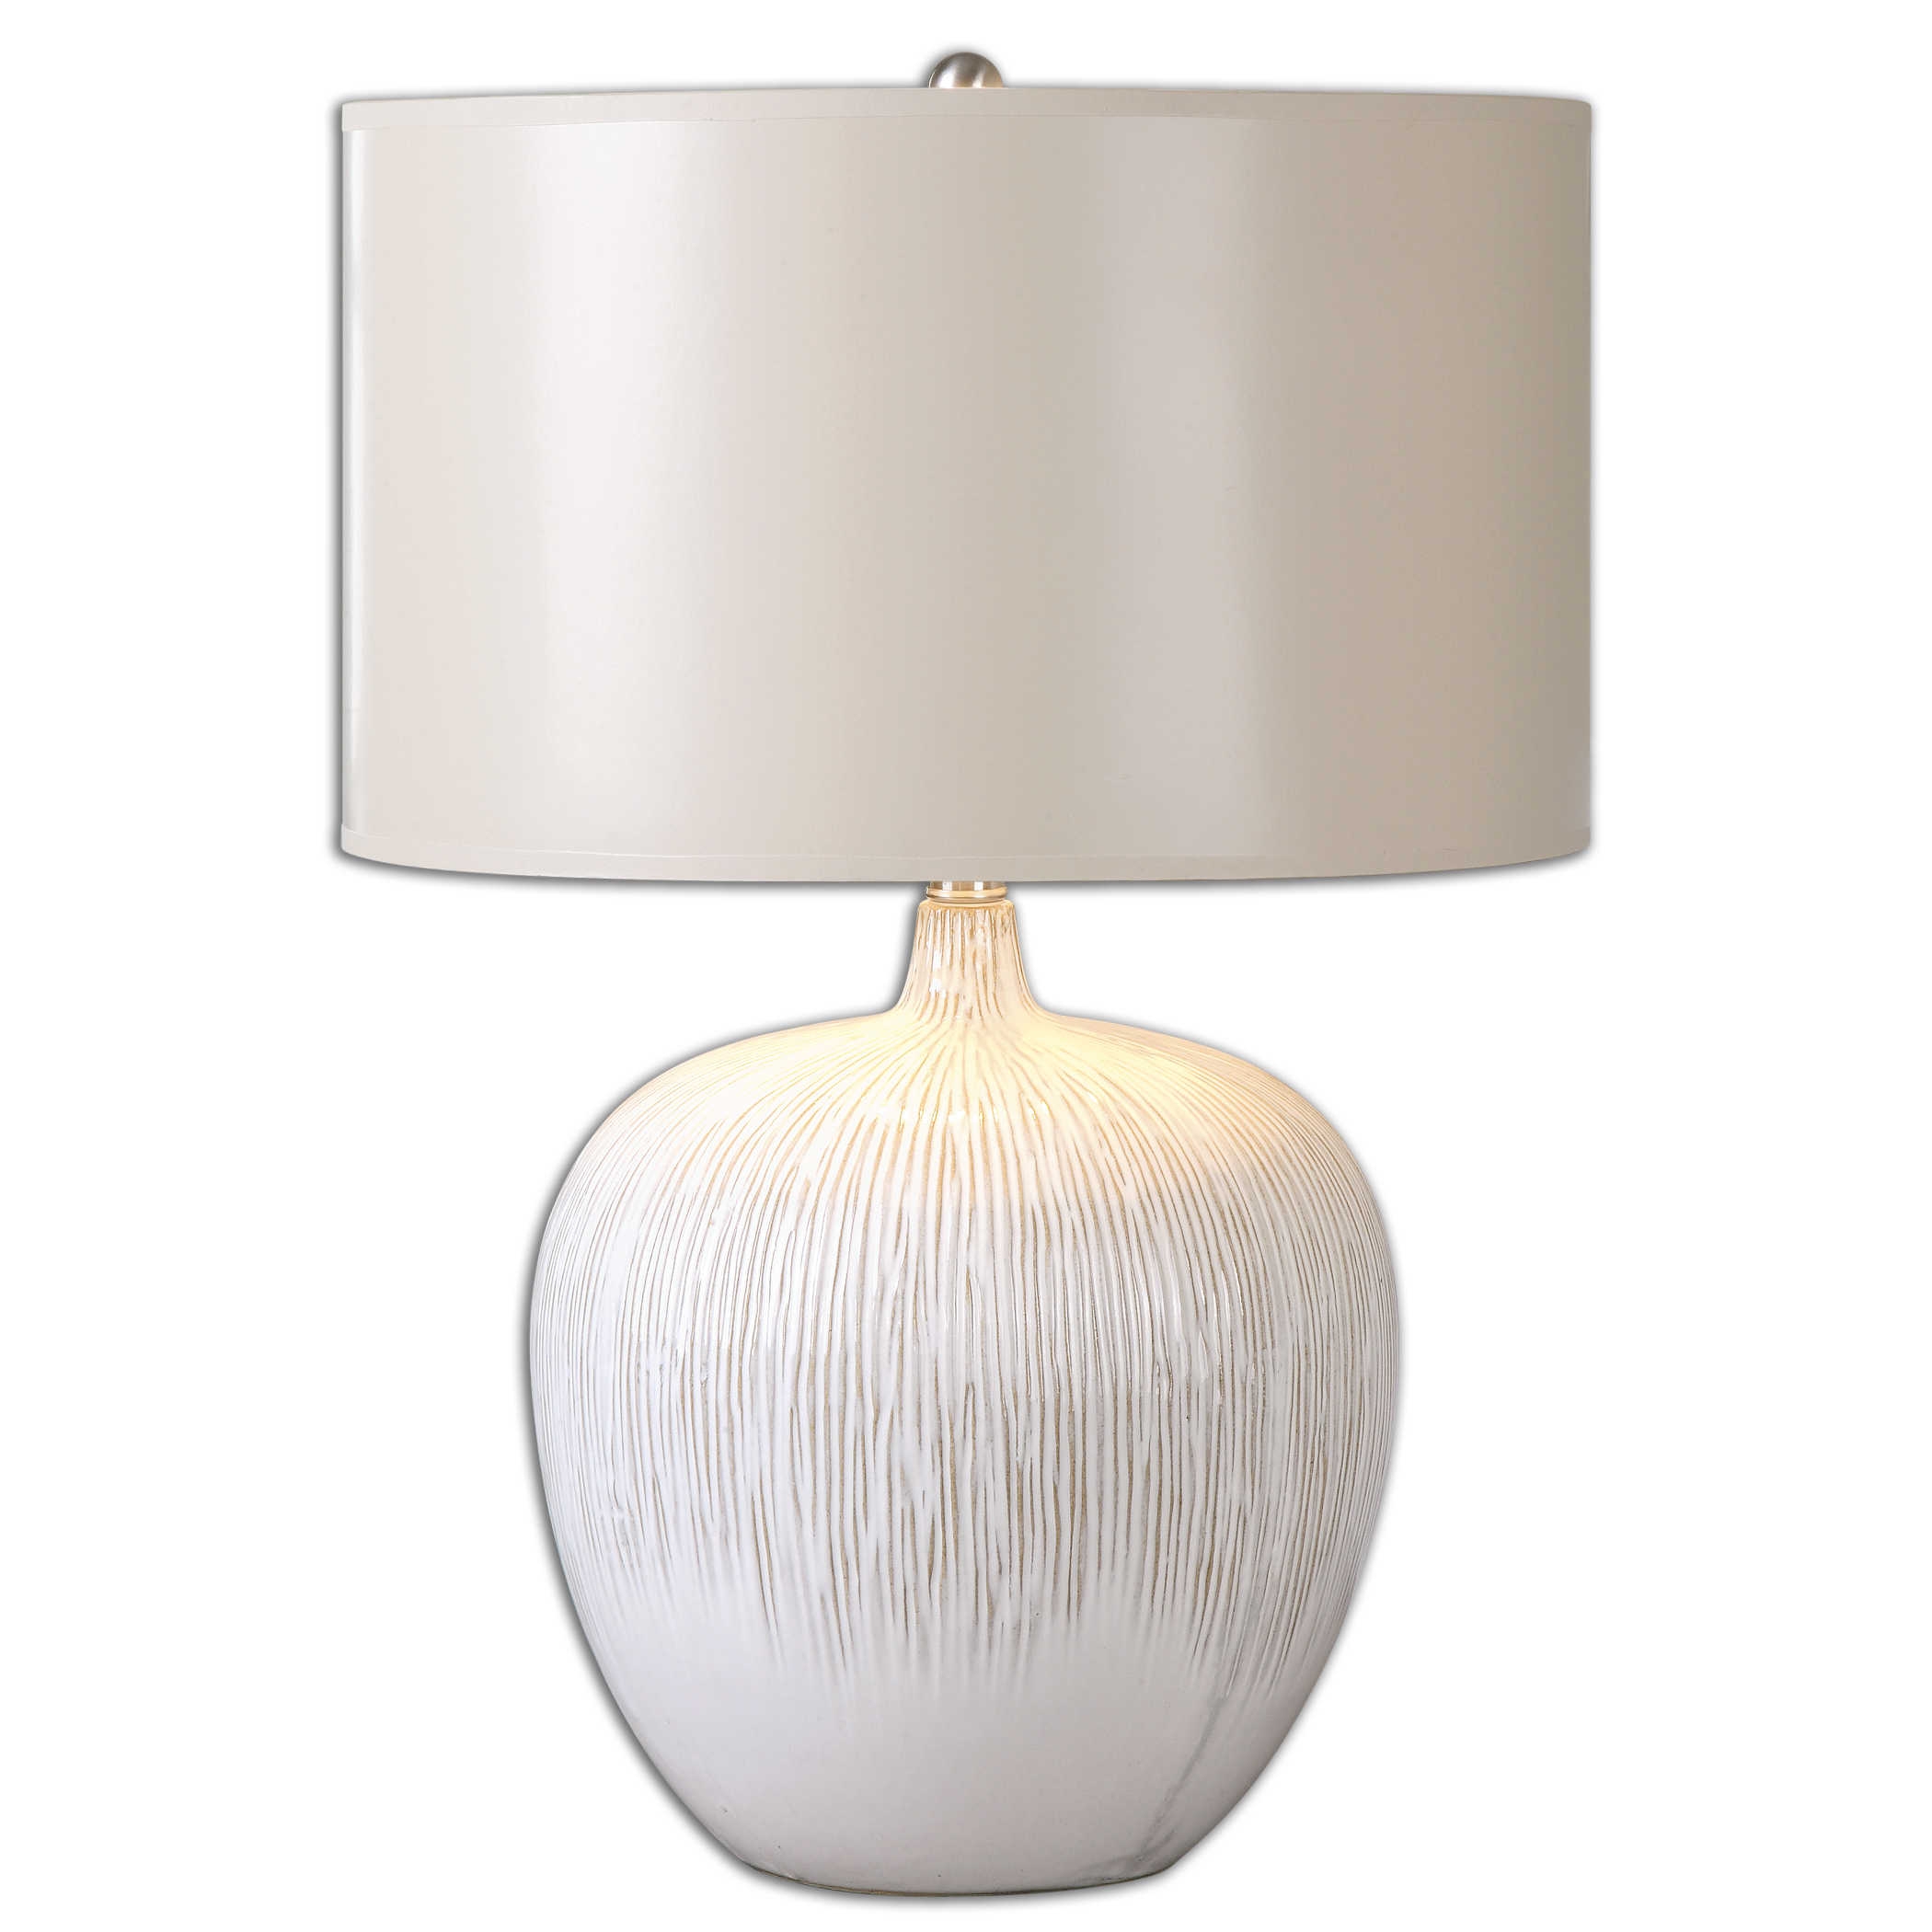 Georgios Table Lamp - Image 1